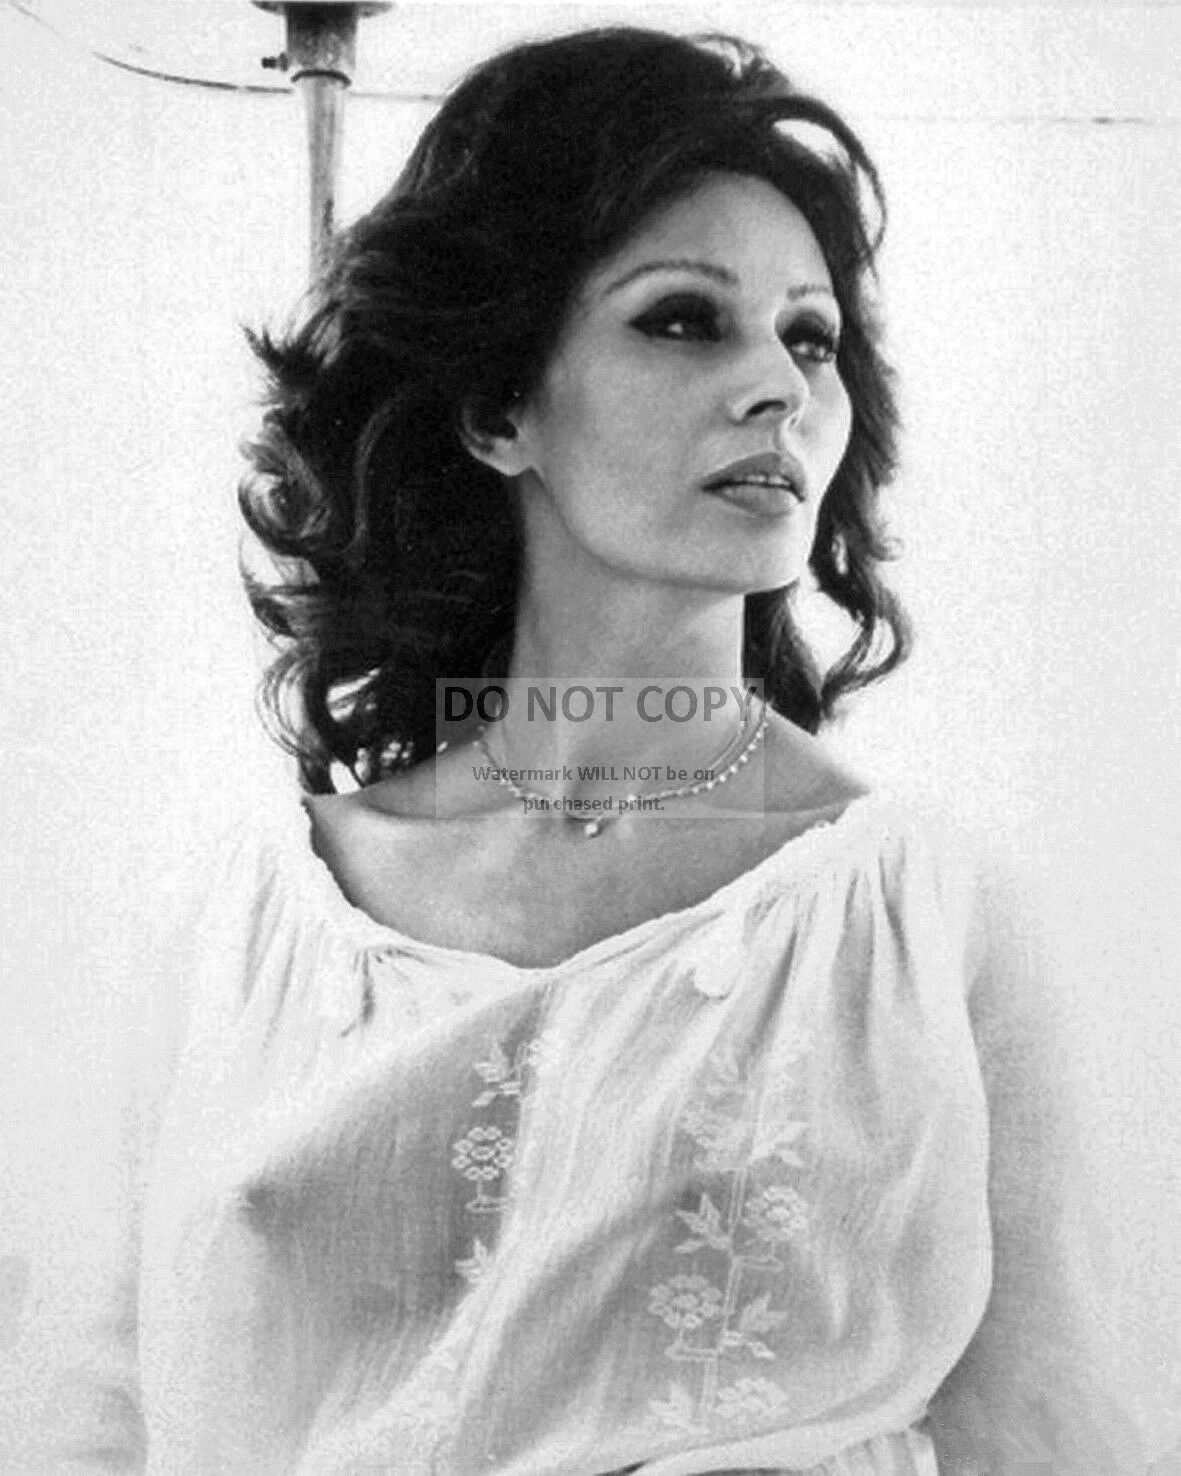 Sophia Loren Legendary Actress Pin Up - 8x10 Publicity Photo (bt027)